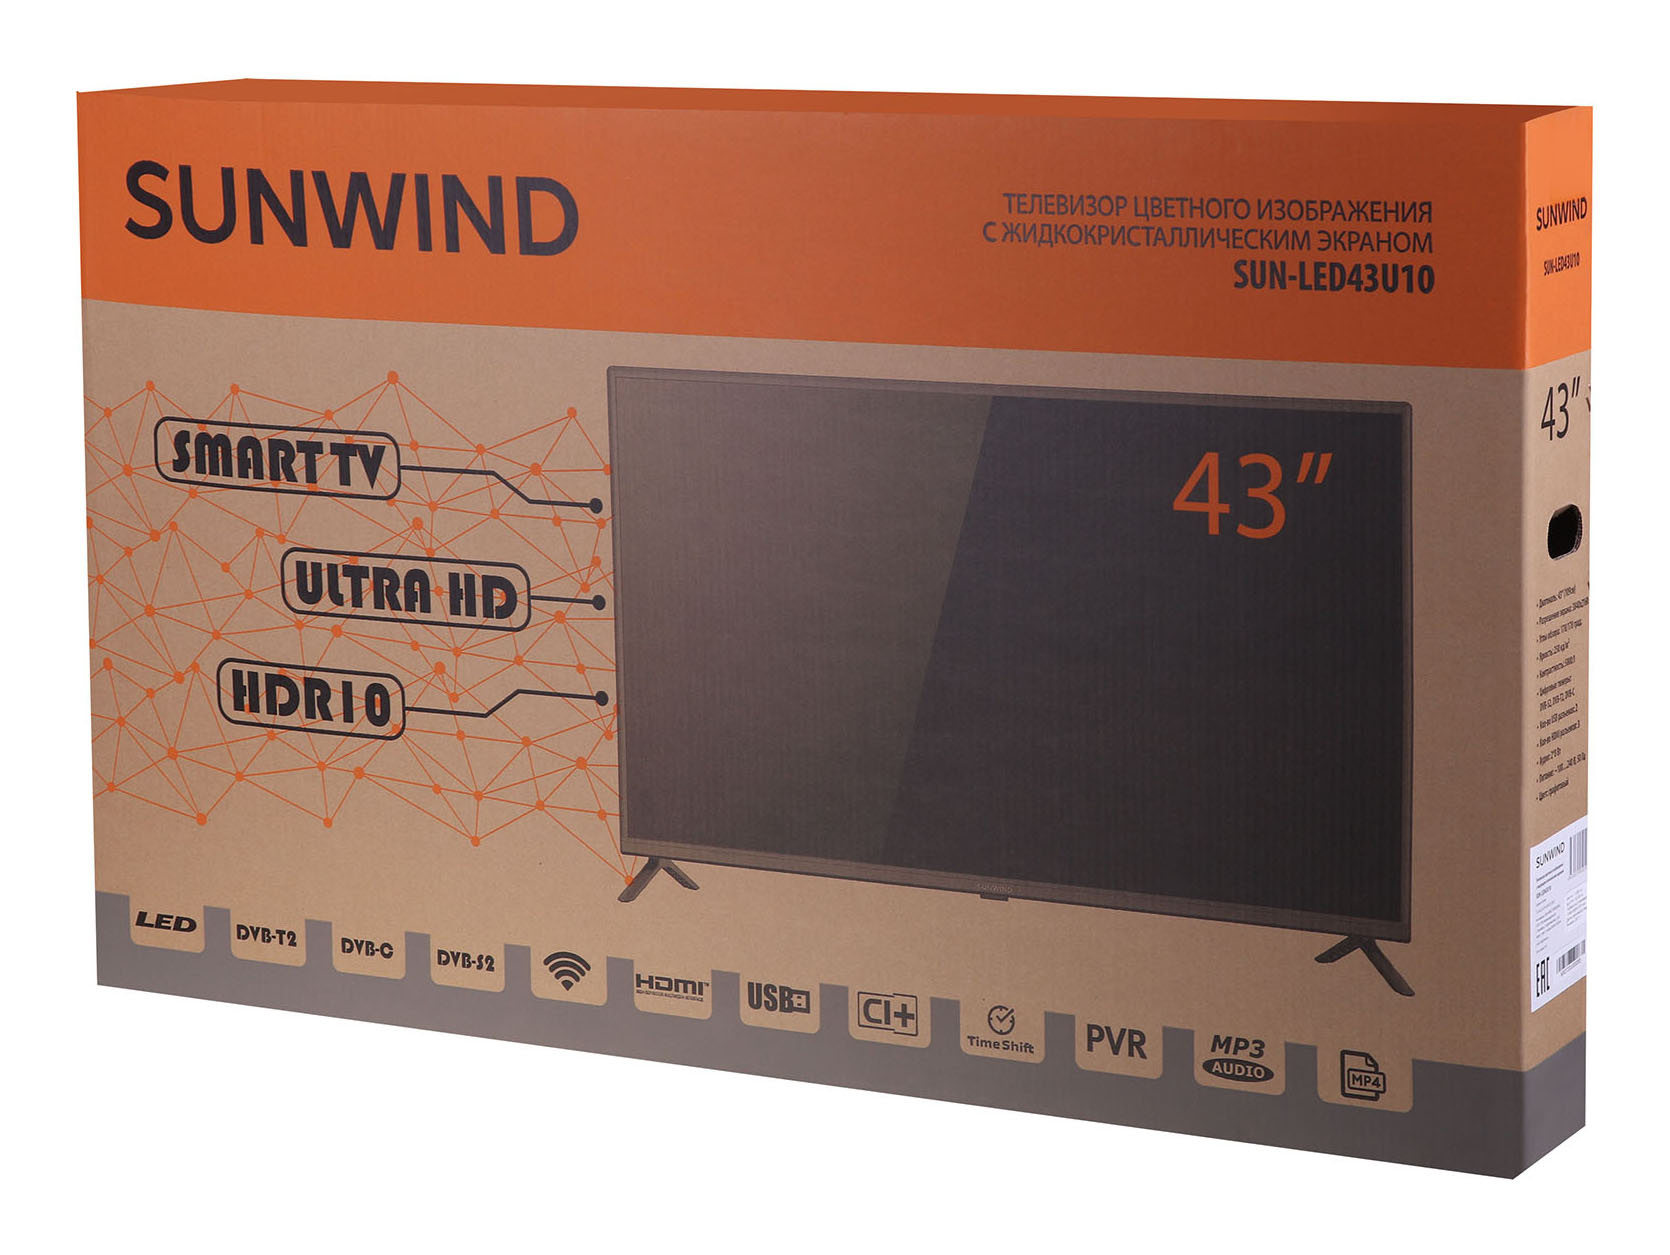 Телевизор sunwind отзывы. Телевизор Sunwind Sun-led43u11. Sunwind Sun-led32xb202. Sunwind Sun-led65xu401. Sunwind телевизор 43.